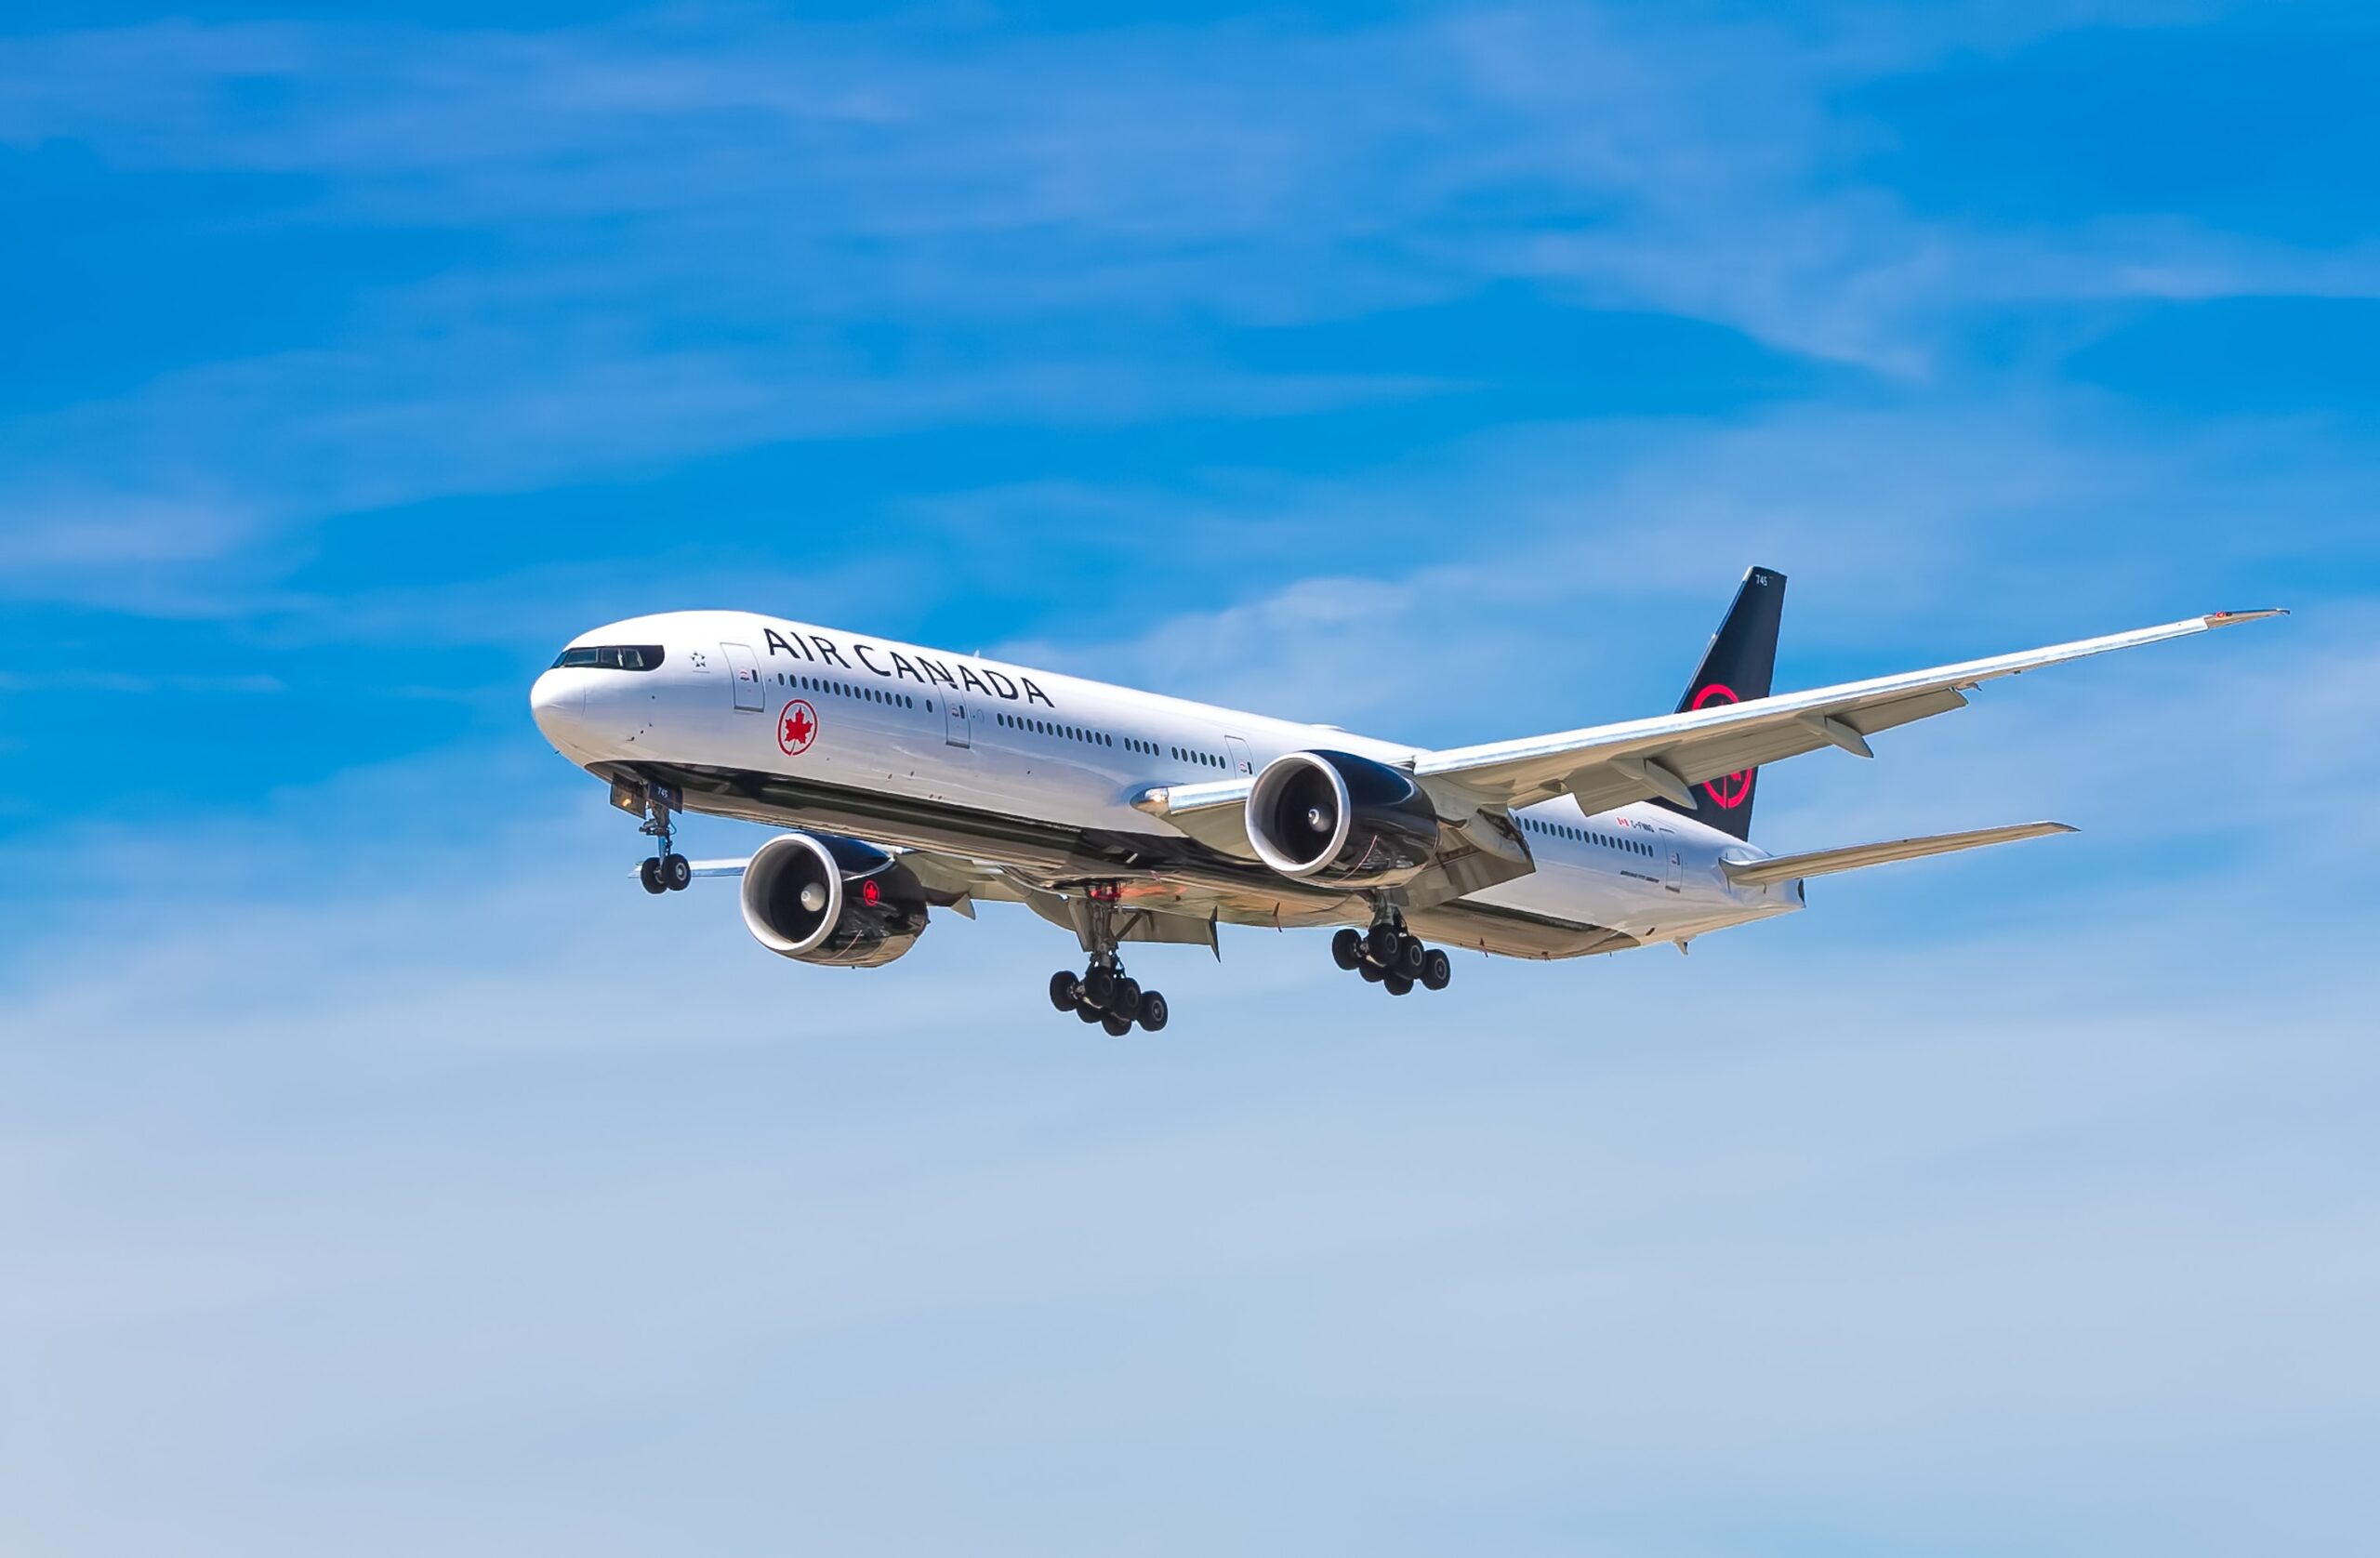 More turbulence for Boeing’s 777x program